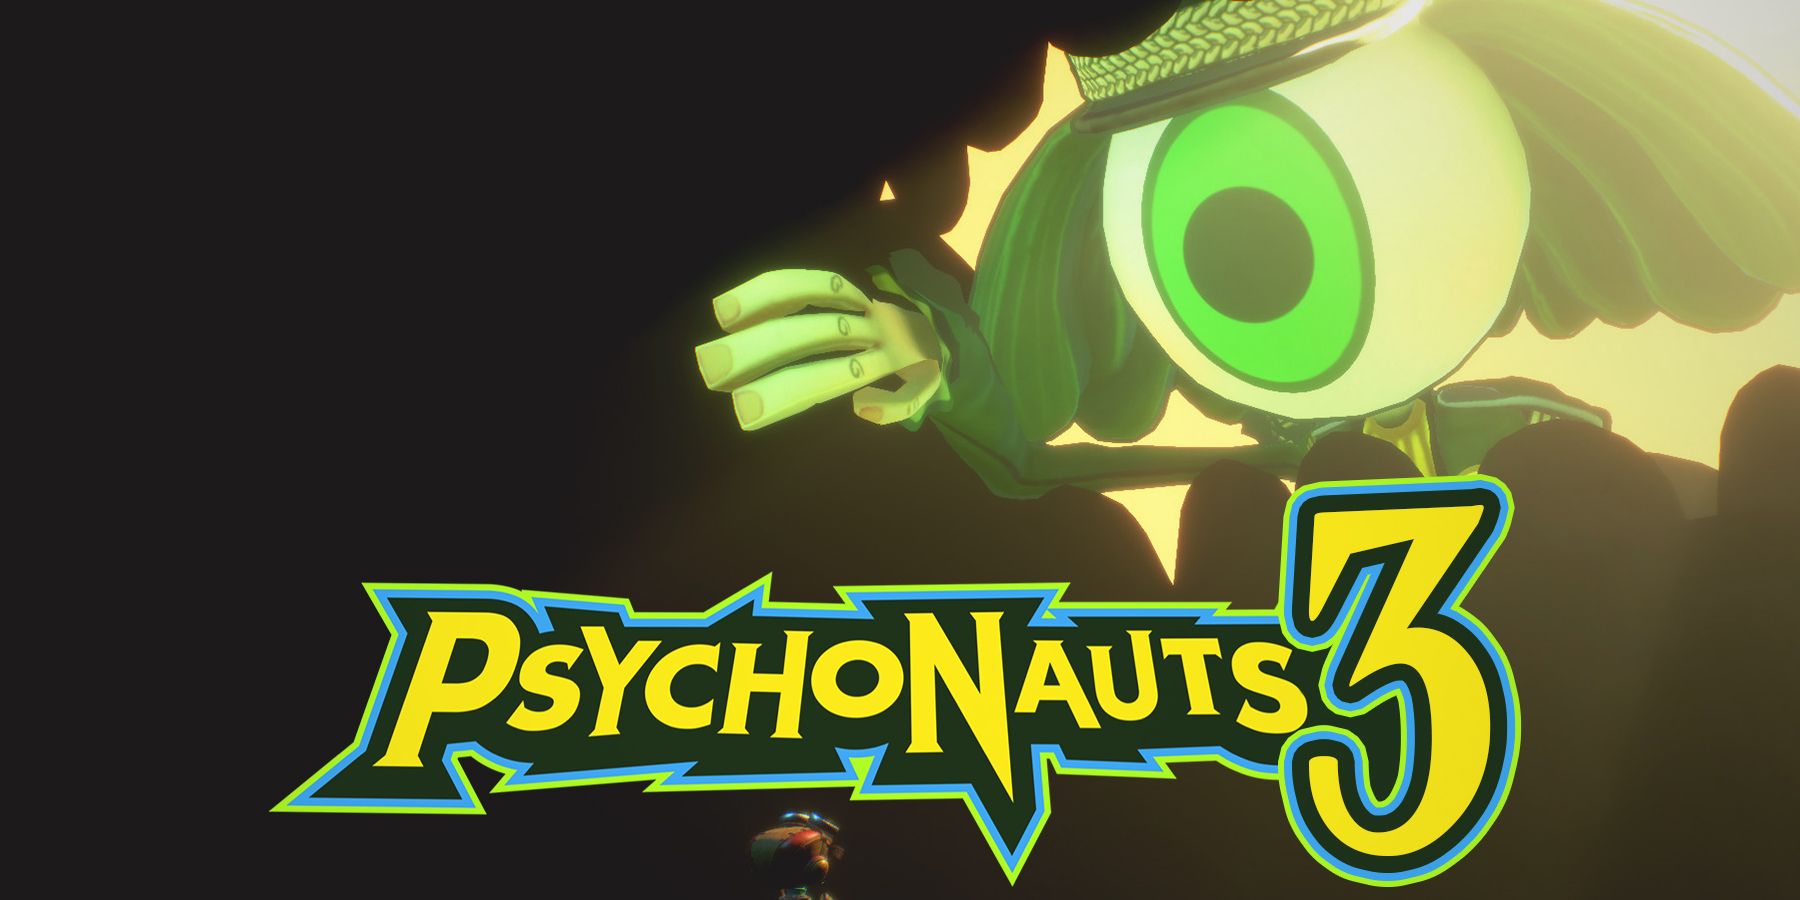 Psychonauts 3 logo illustration